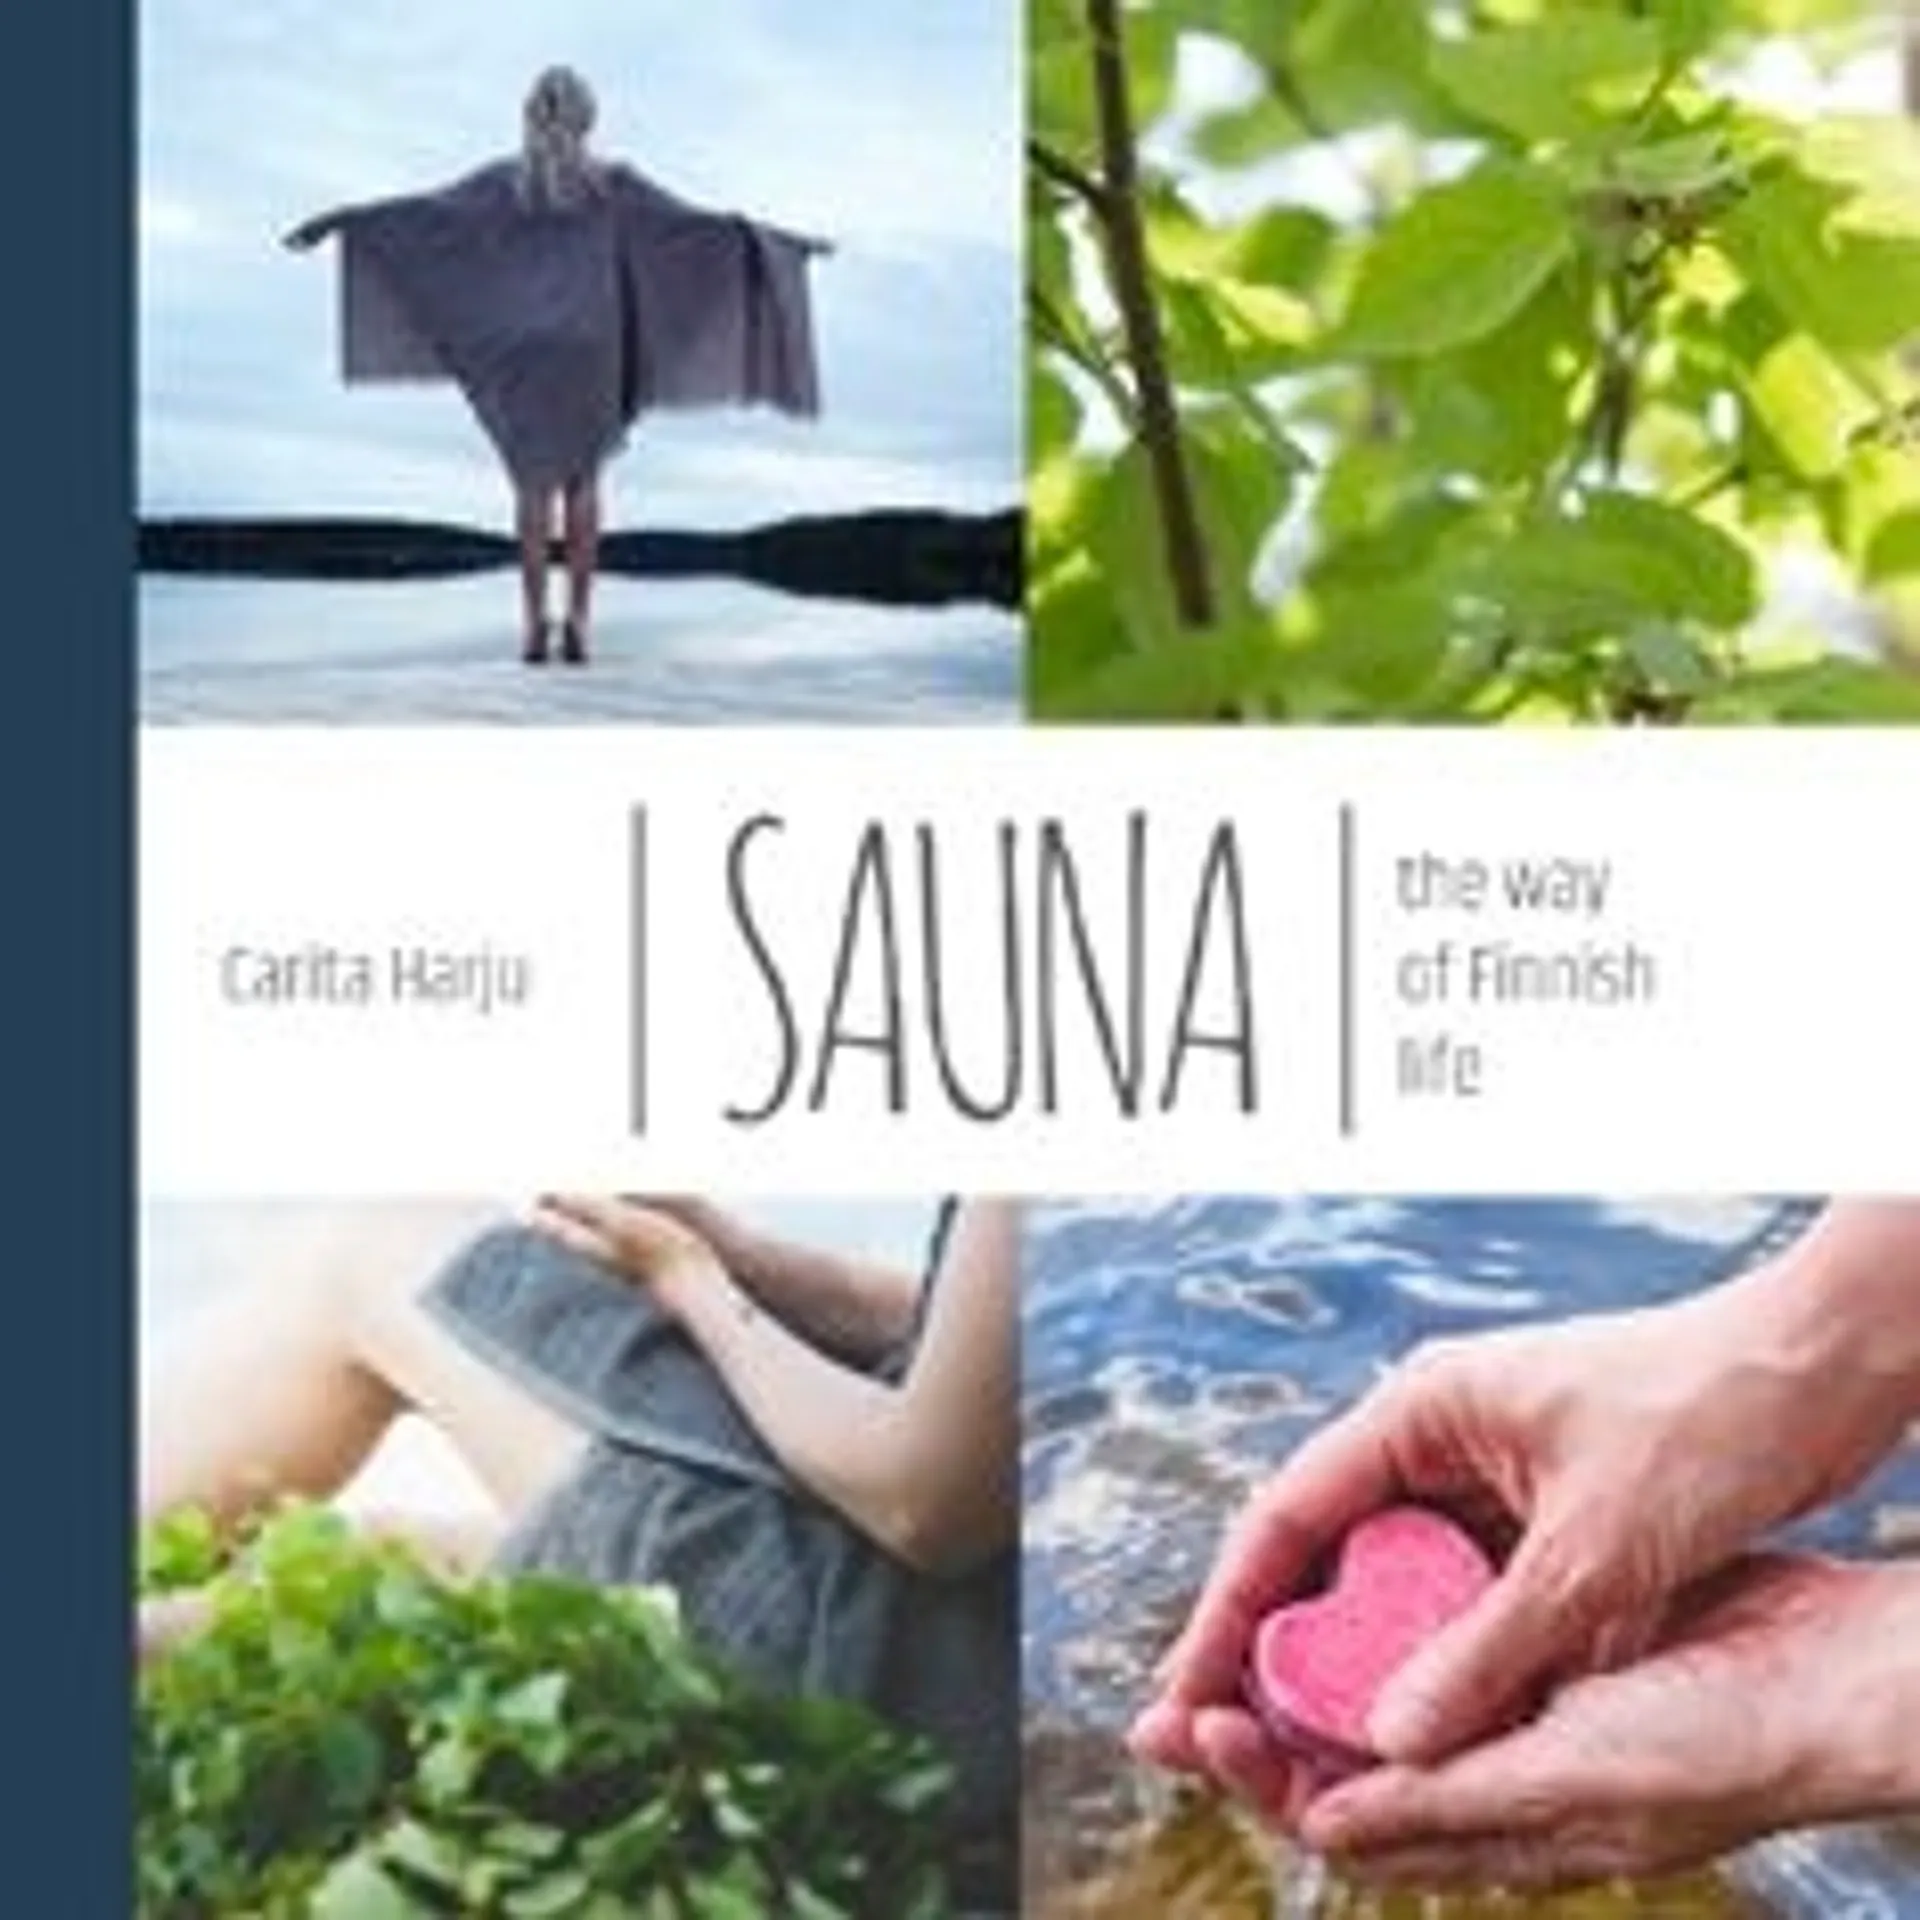 Harju, Sauna - the way of Finnish life